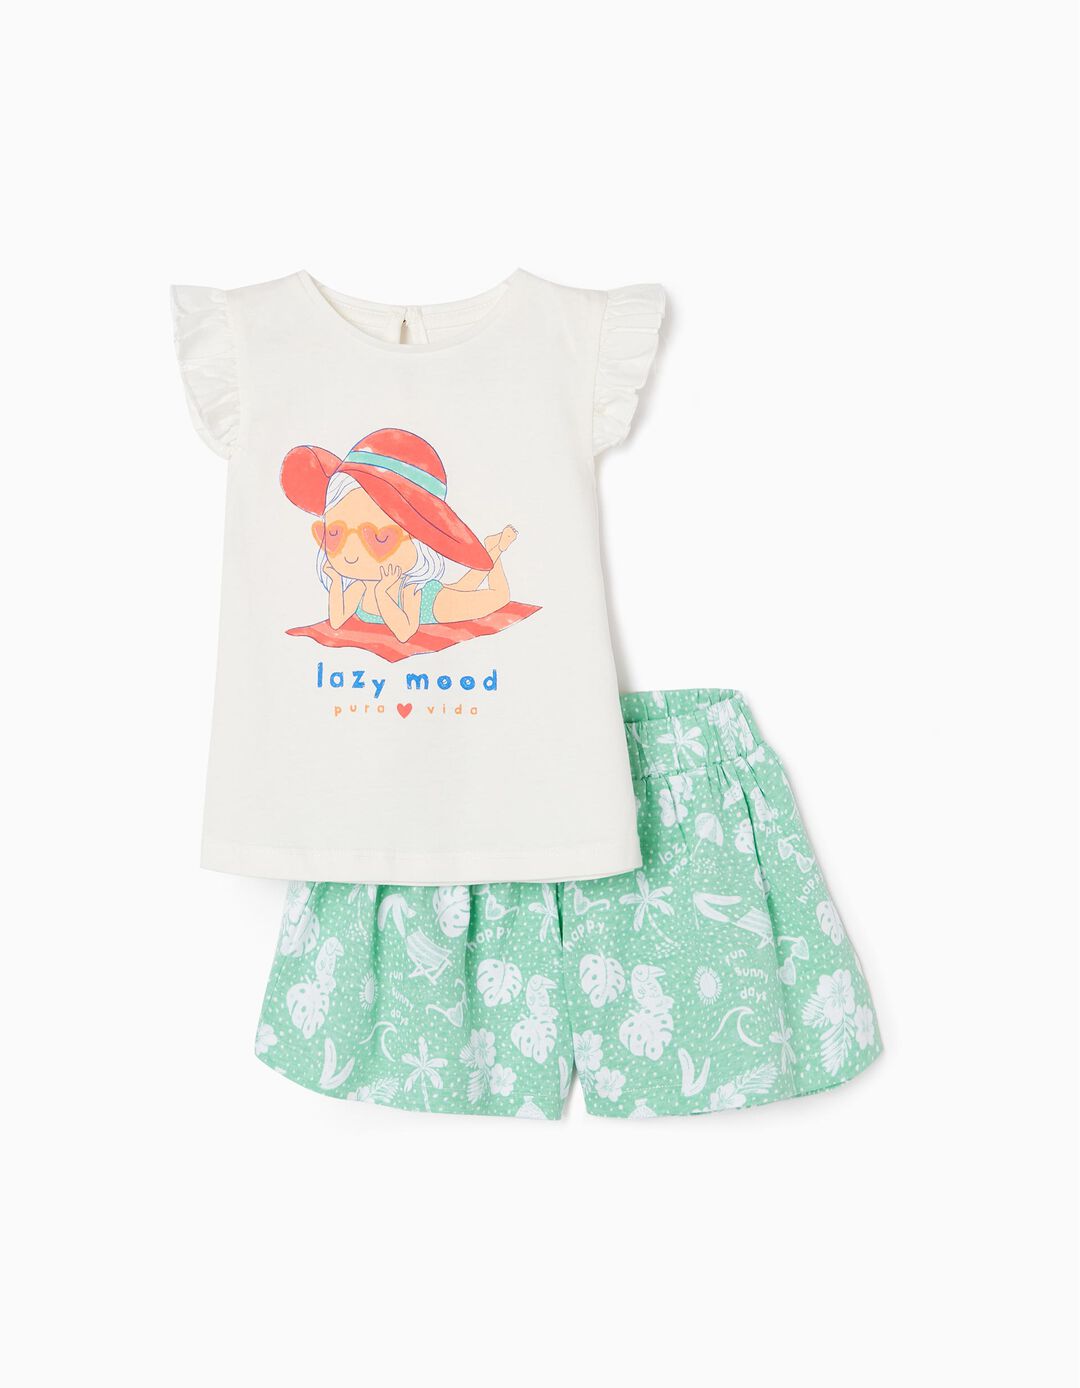 T-shirt + Shorts Set for Baby Girls 'Pura Vida', White/Green